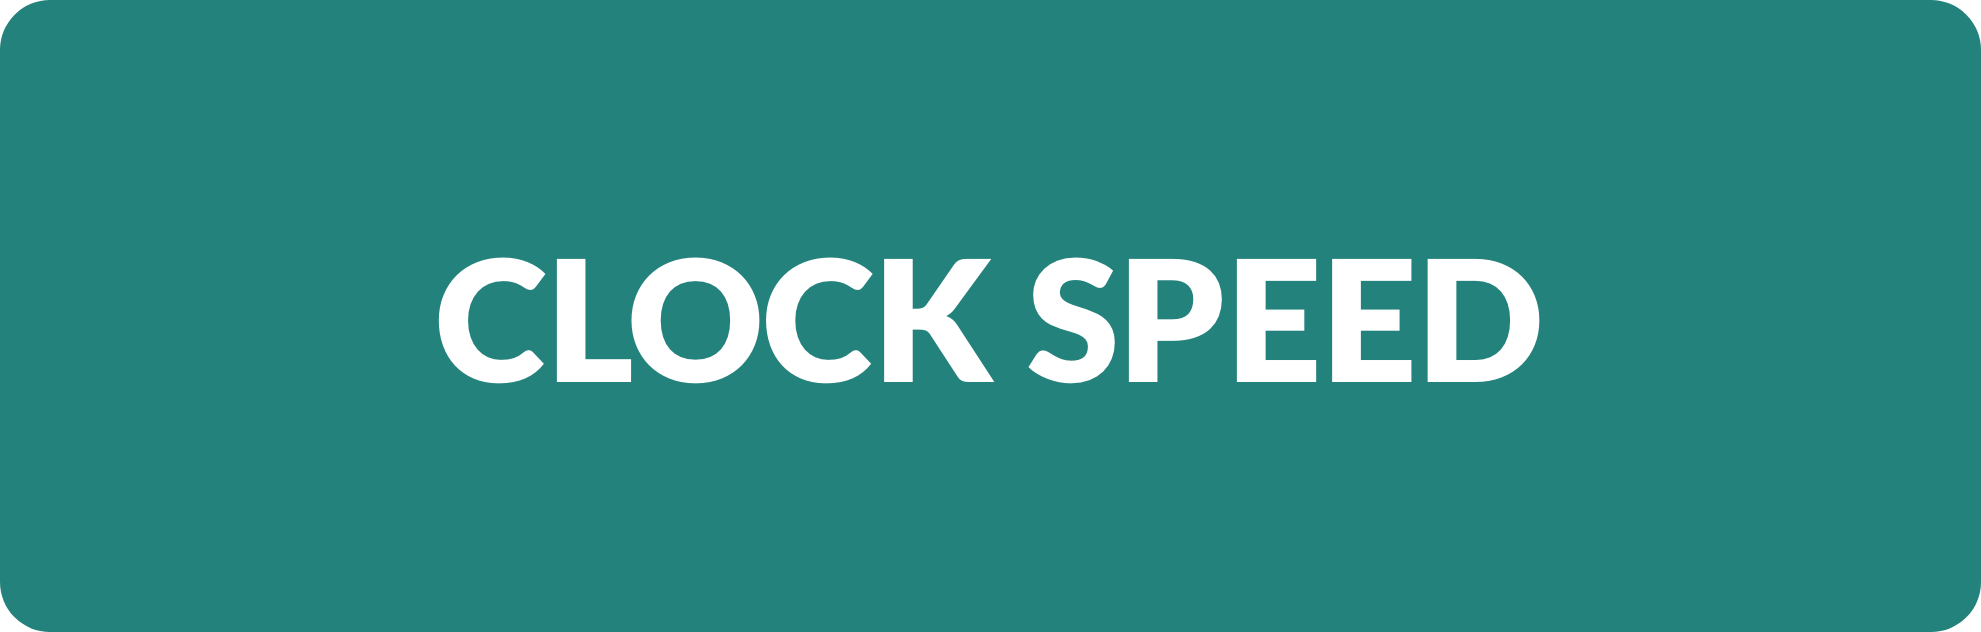 Clock Speed | RoomRaccoon Values